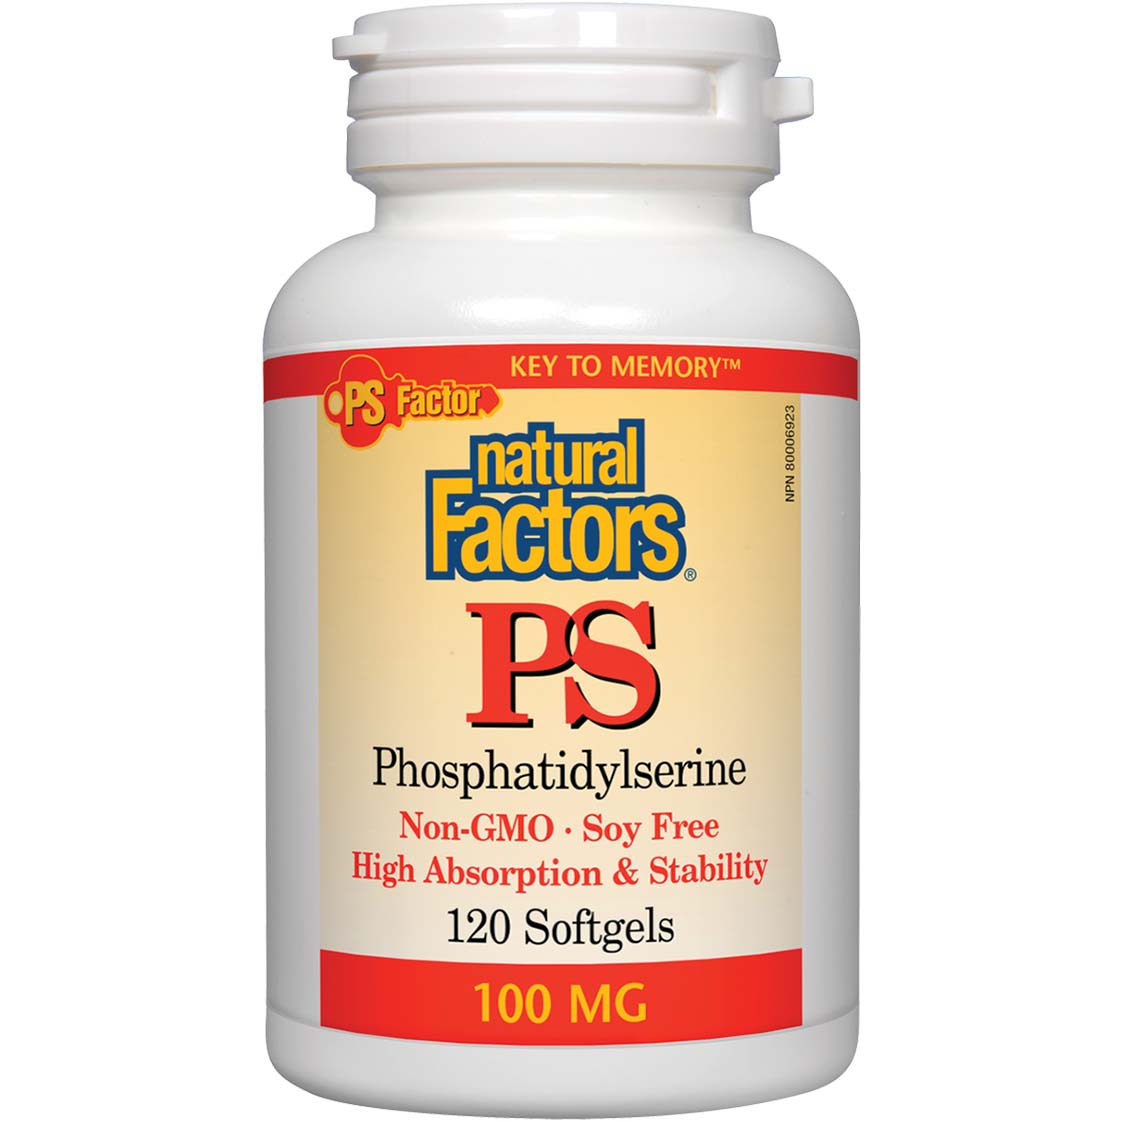 Natural Factors PS Phosphatidylserine, 100 mg, 120 Softgels